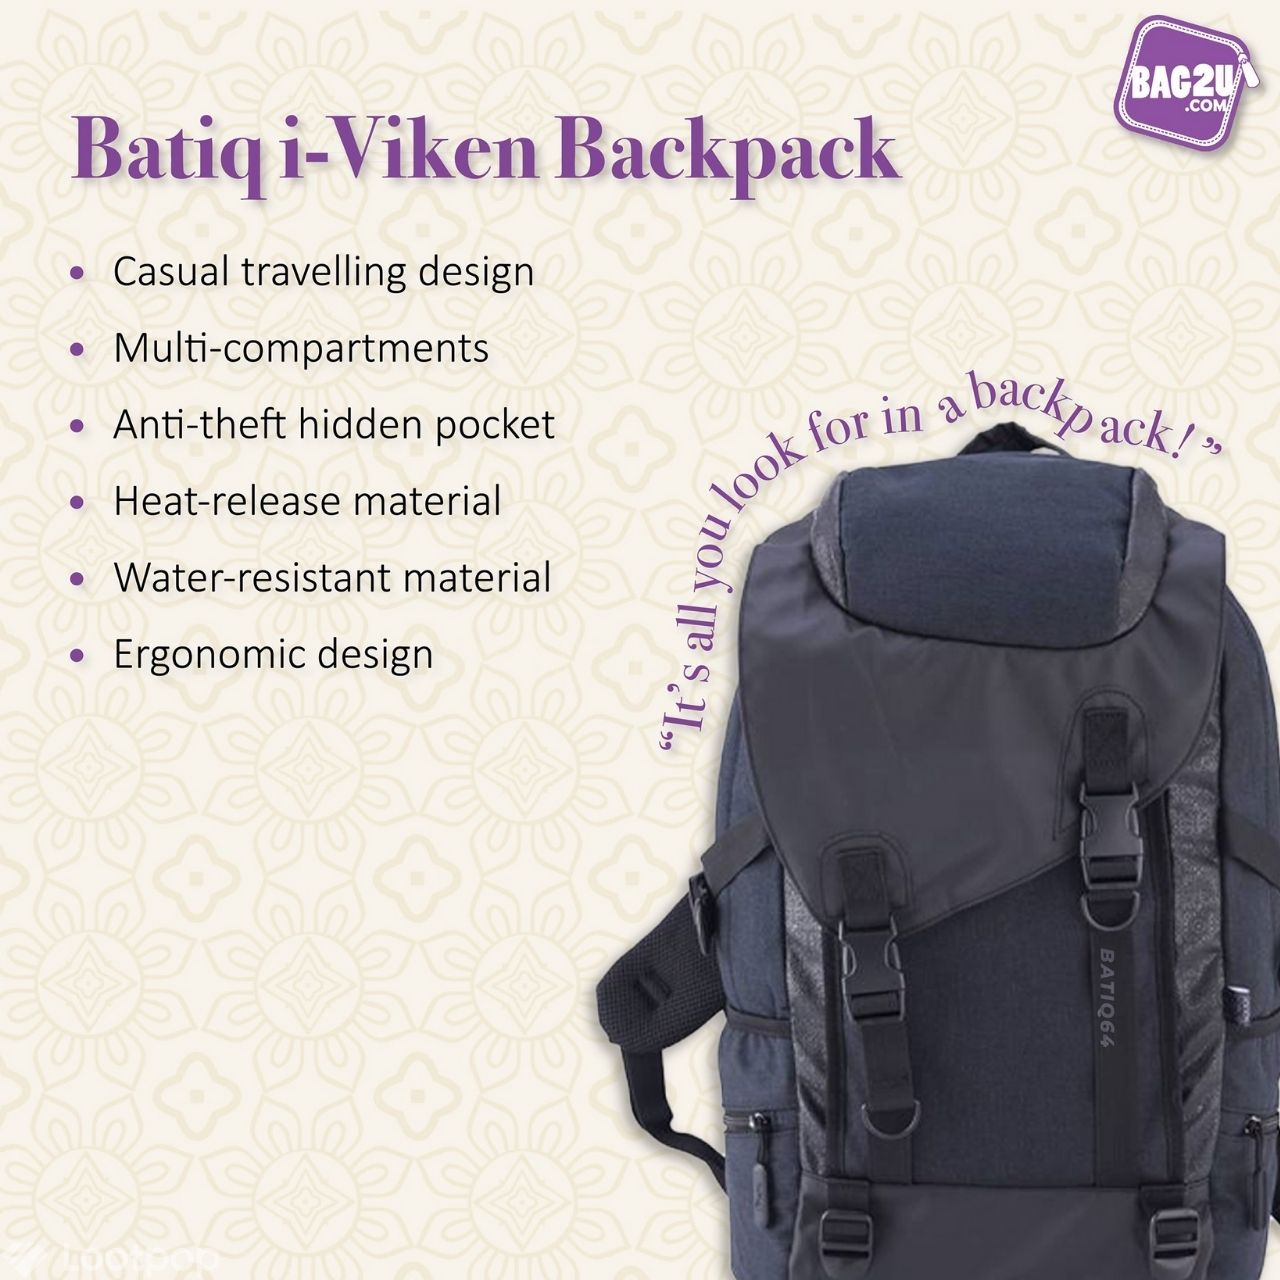 Exclusive Bag2u 31% Off Voucher for Batiq i-Viken Backpack